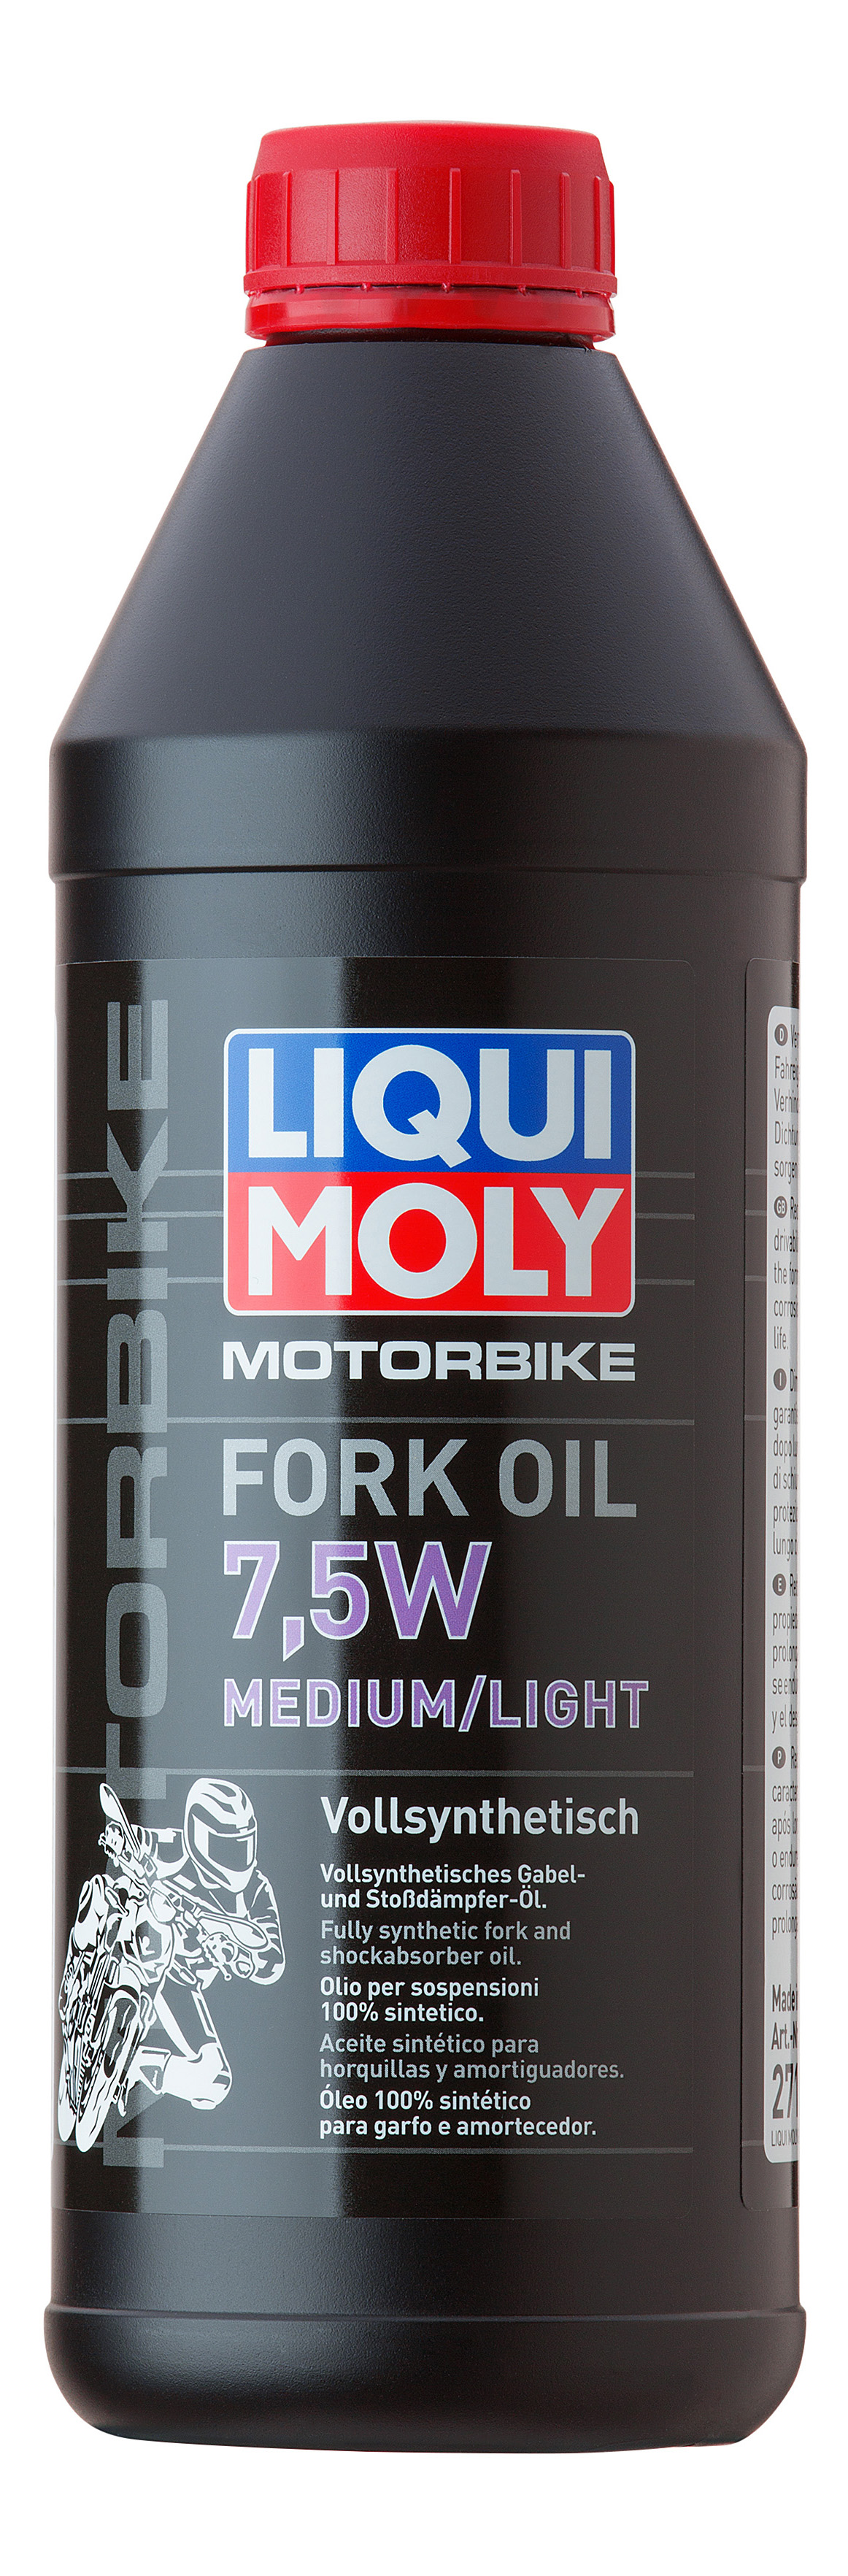 LIQUI MOLY Синт, масло д/вилок и амортиз, Motorbike Fork Oil Medium/Light 7,5W